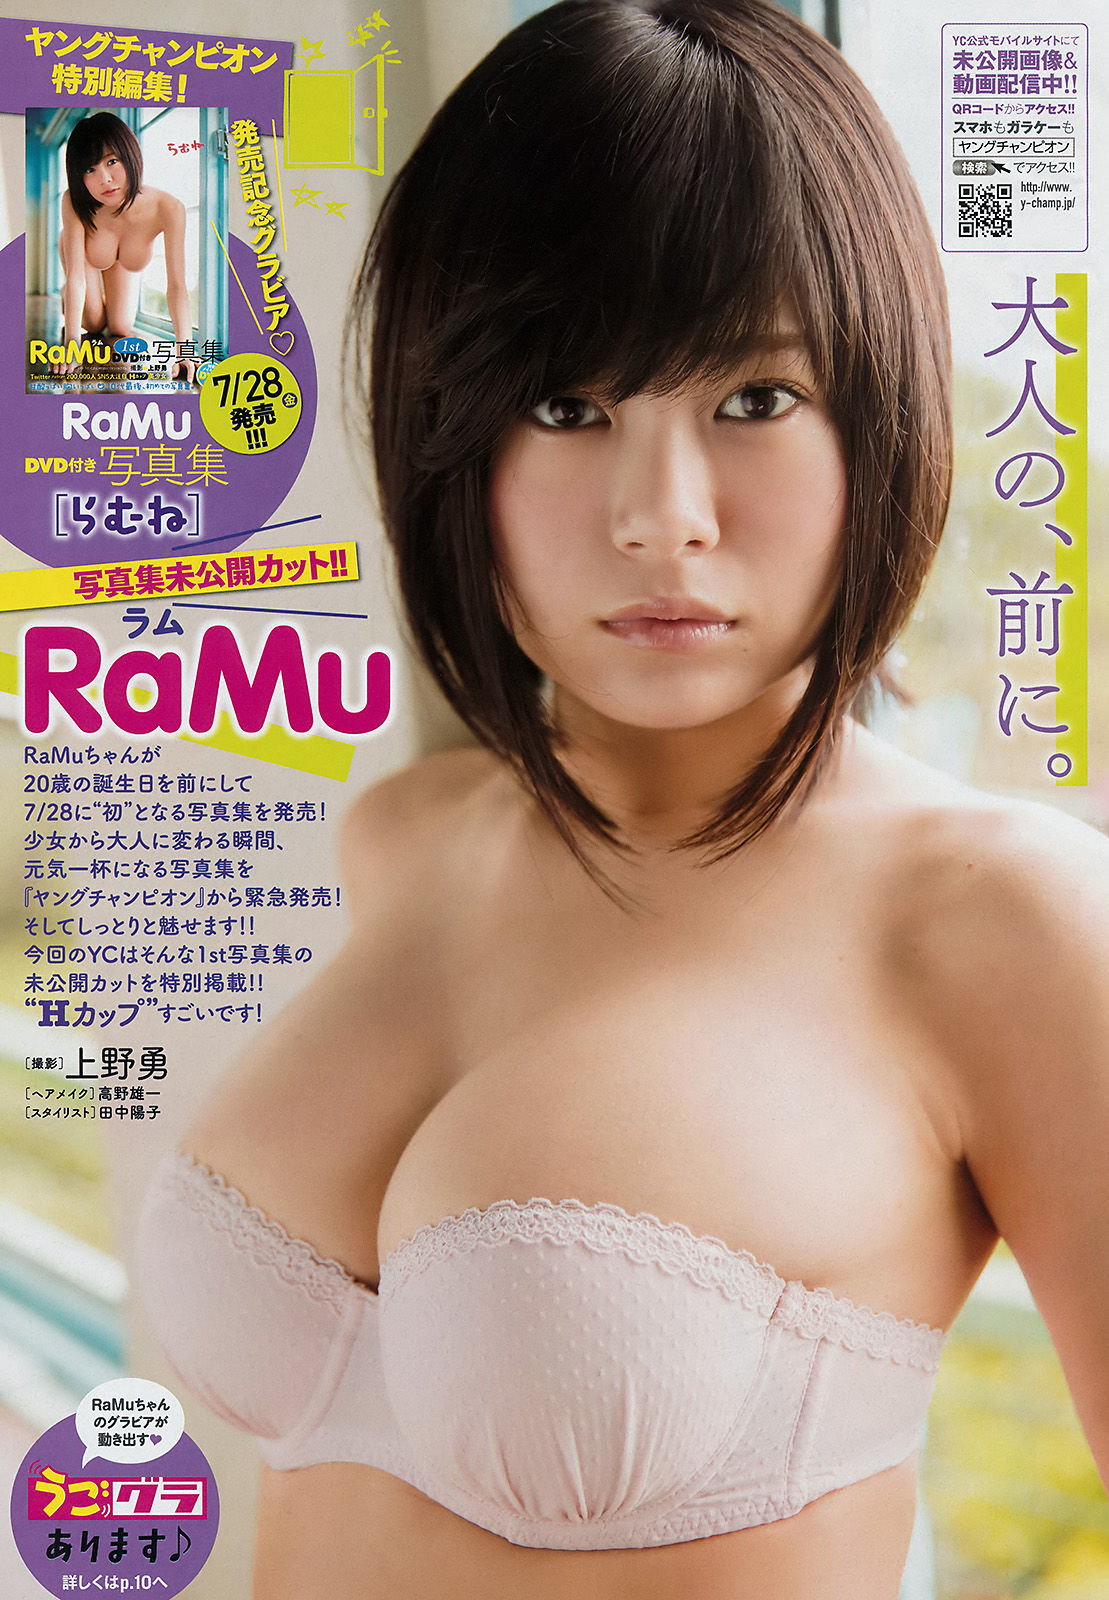 [Young Champion]大胸日本萌妹子爆乳:RaMu高品质绝版网图珍藏版(12P)